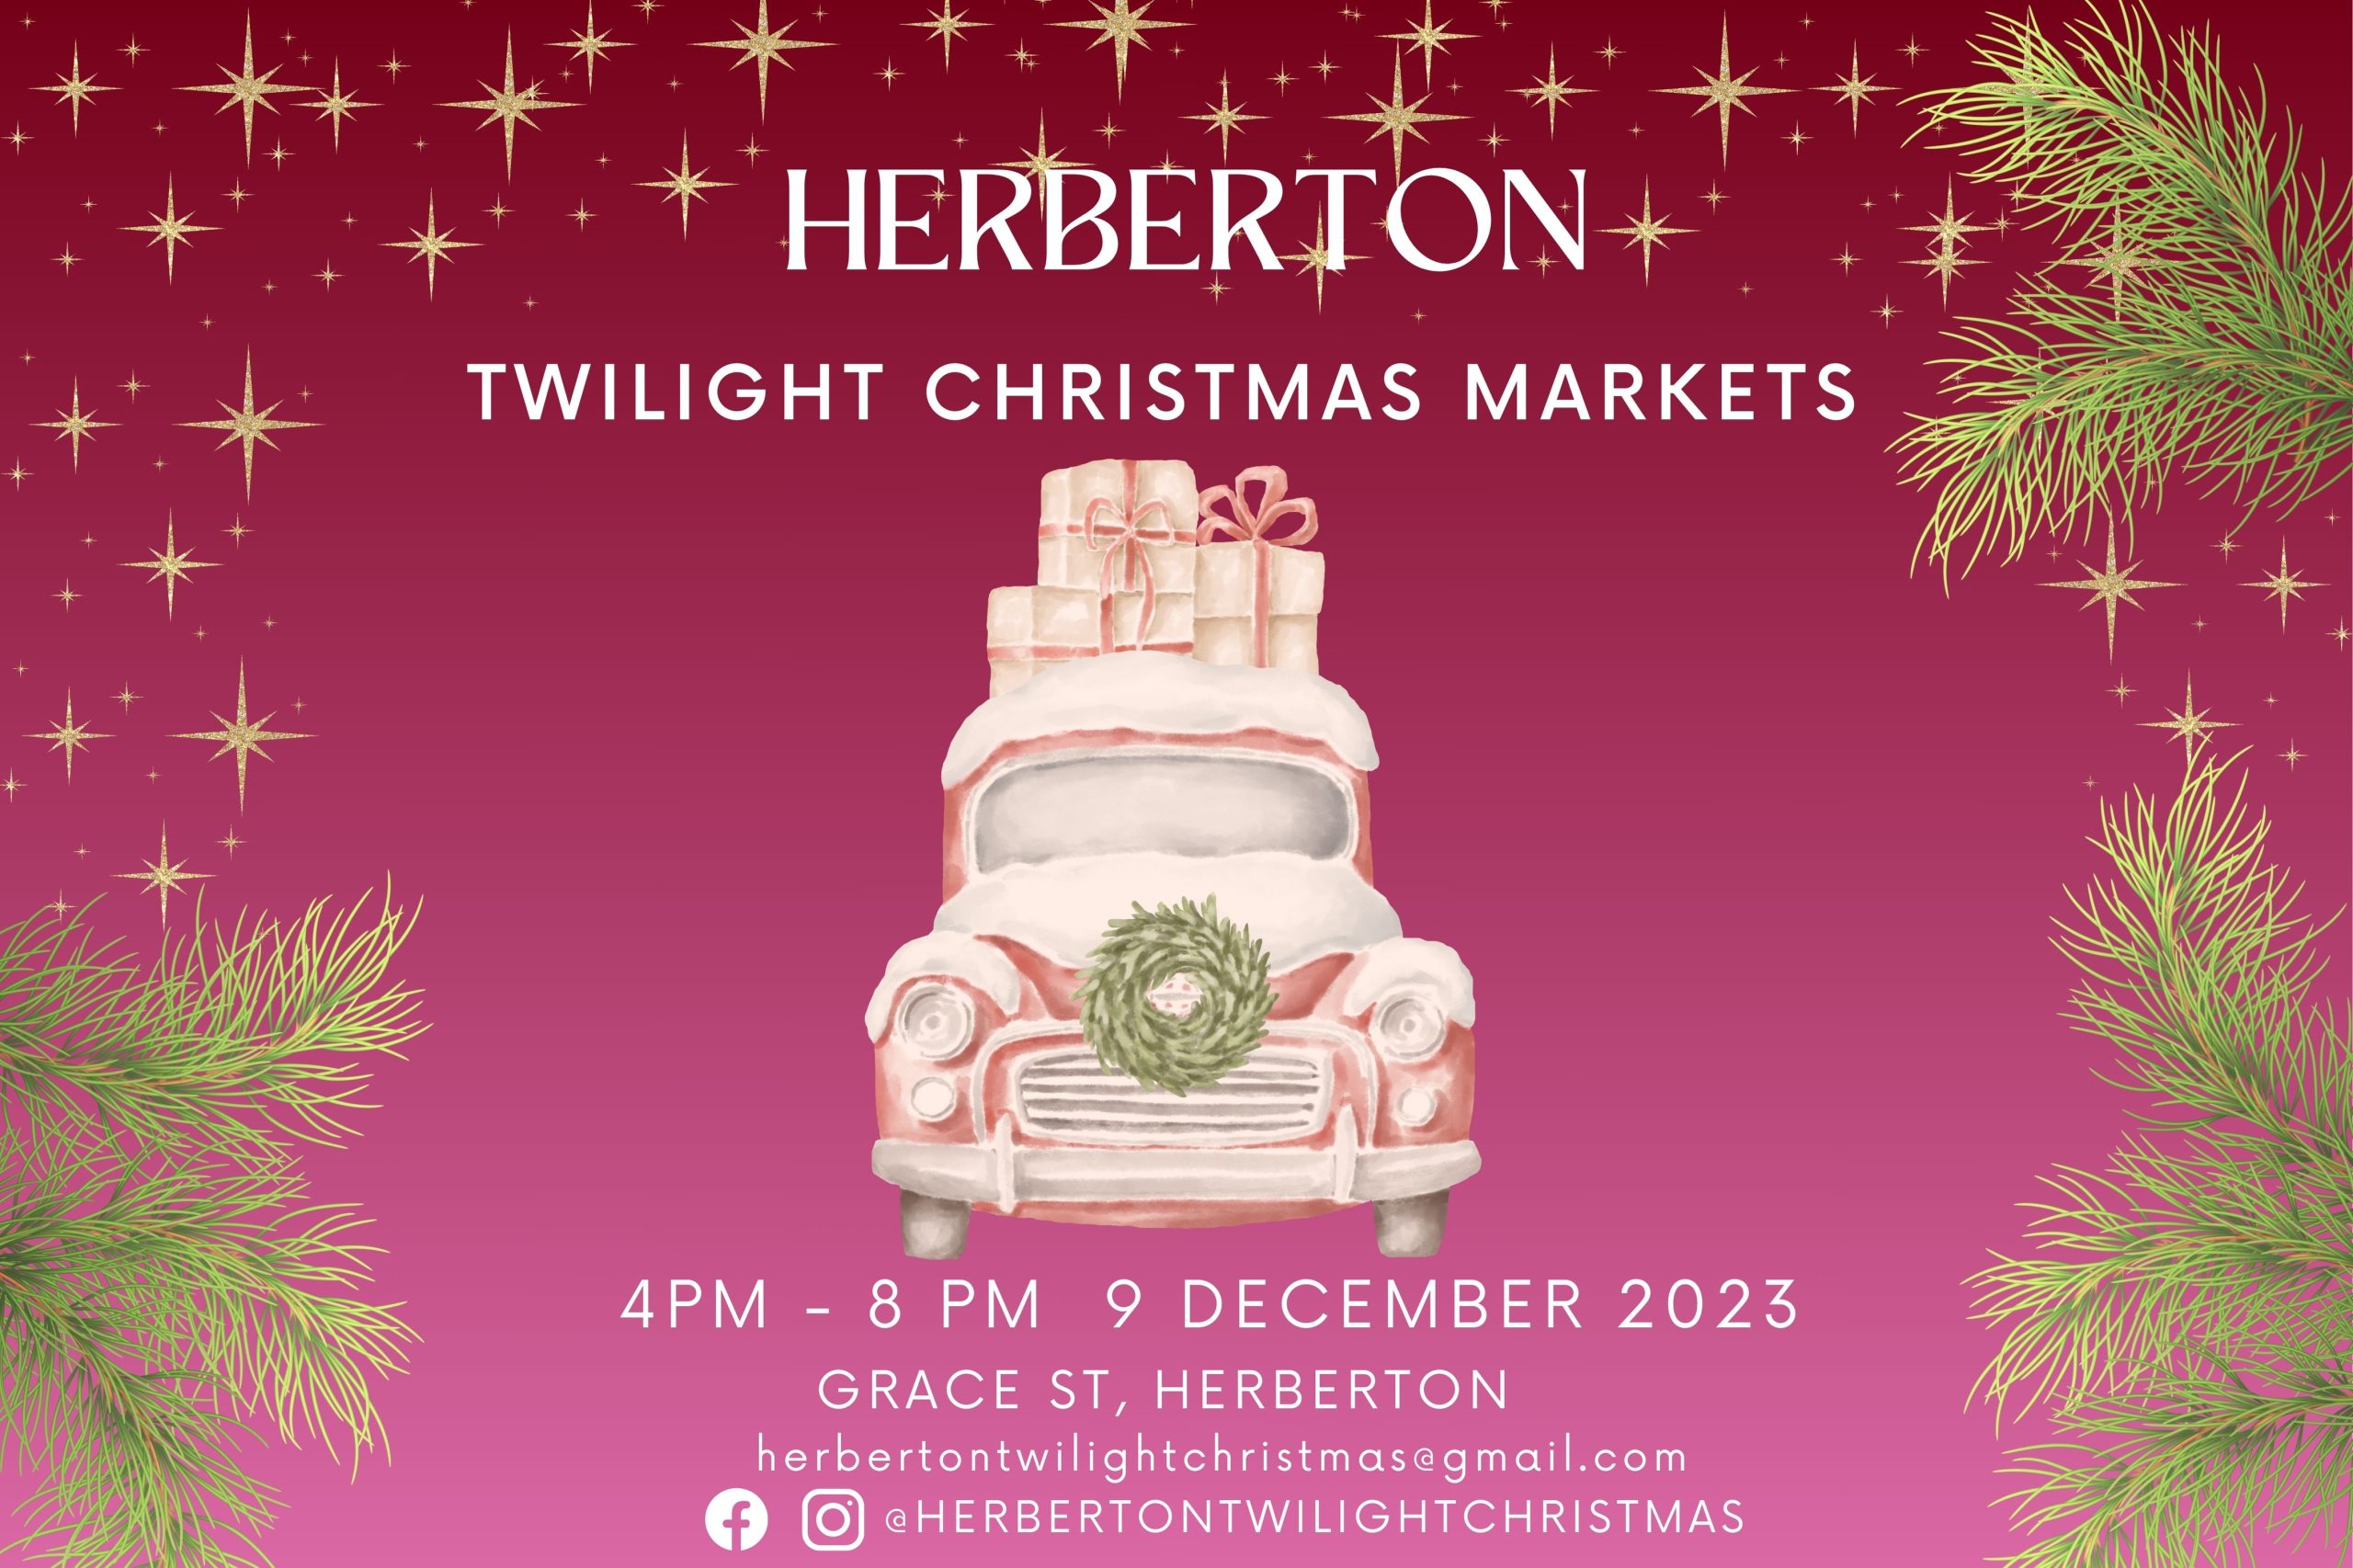 Herberton Twilight Christmas Markets